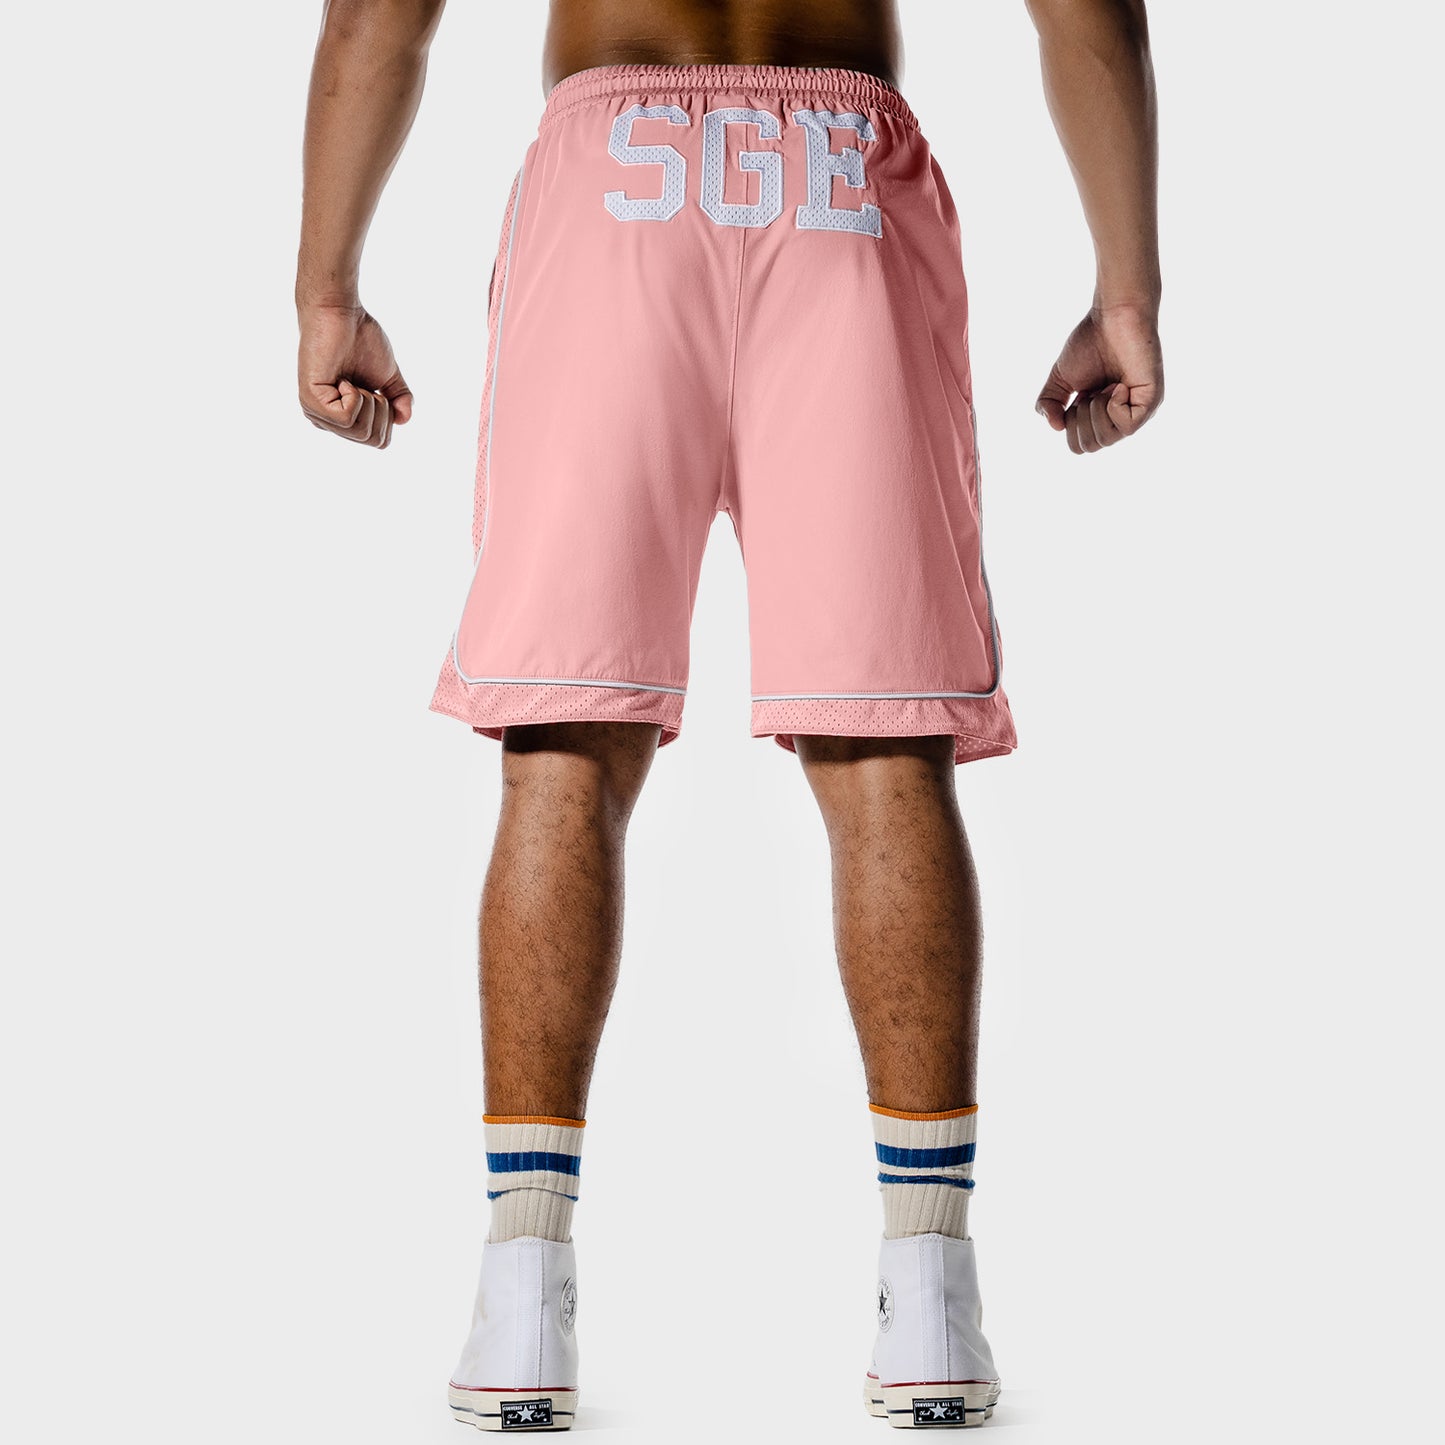 squatwolf-gym-wear-golden-era-basketball-shorts-pink-workout-shorts-for-men